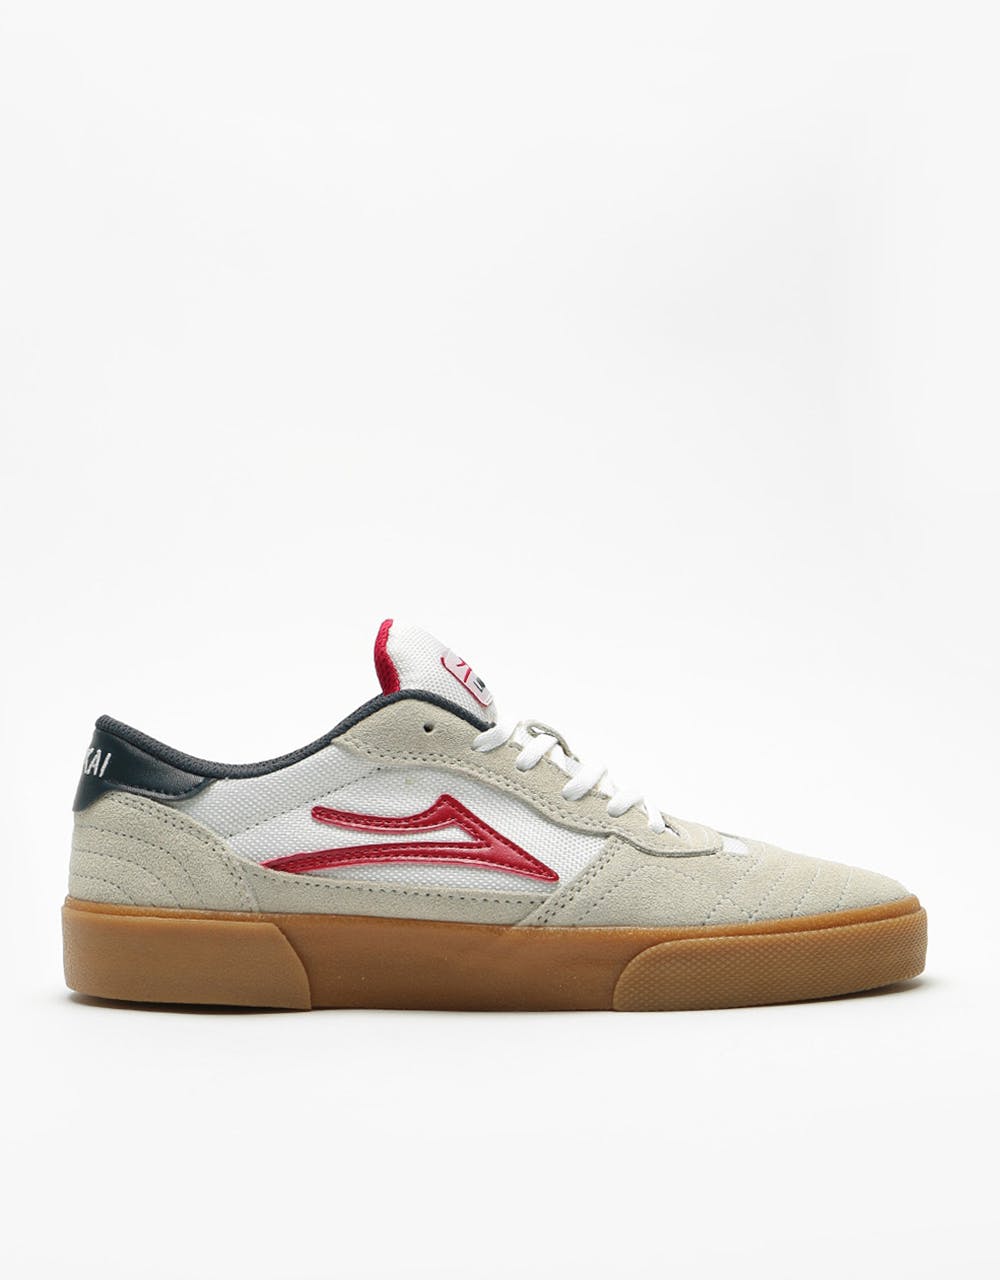 Lakai Cambridge Skate Shoes - White/Gum Suede